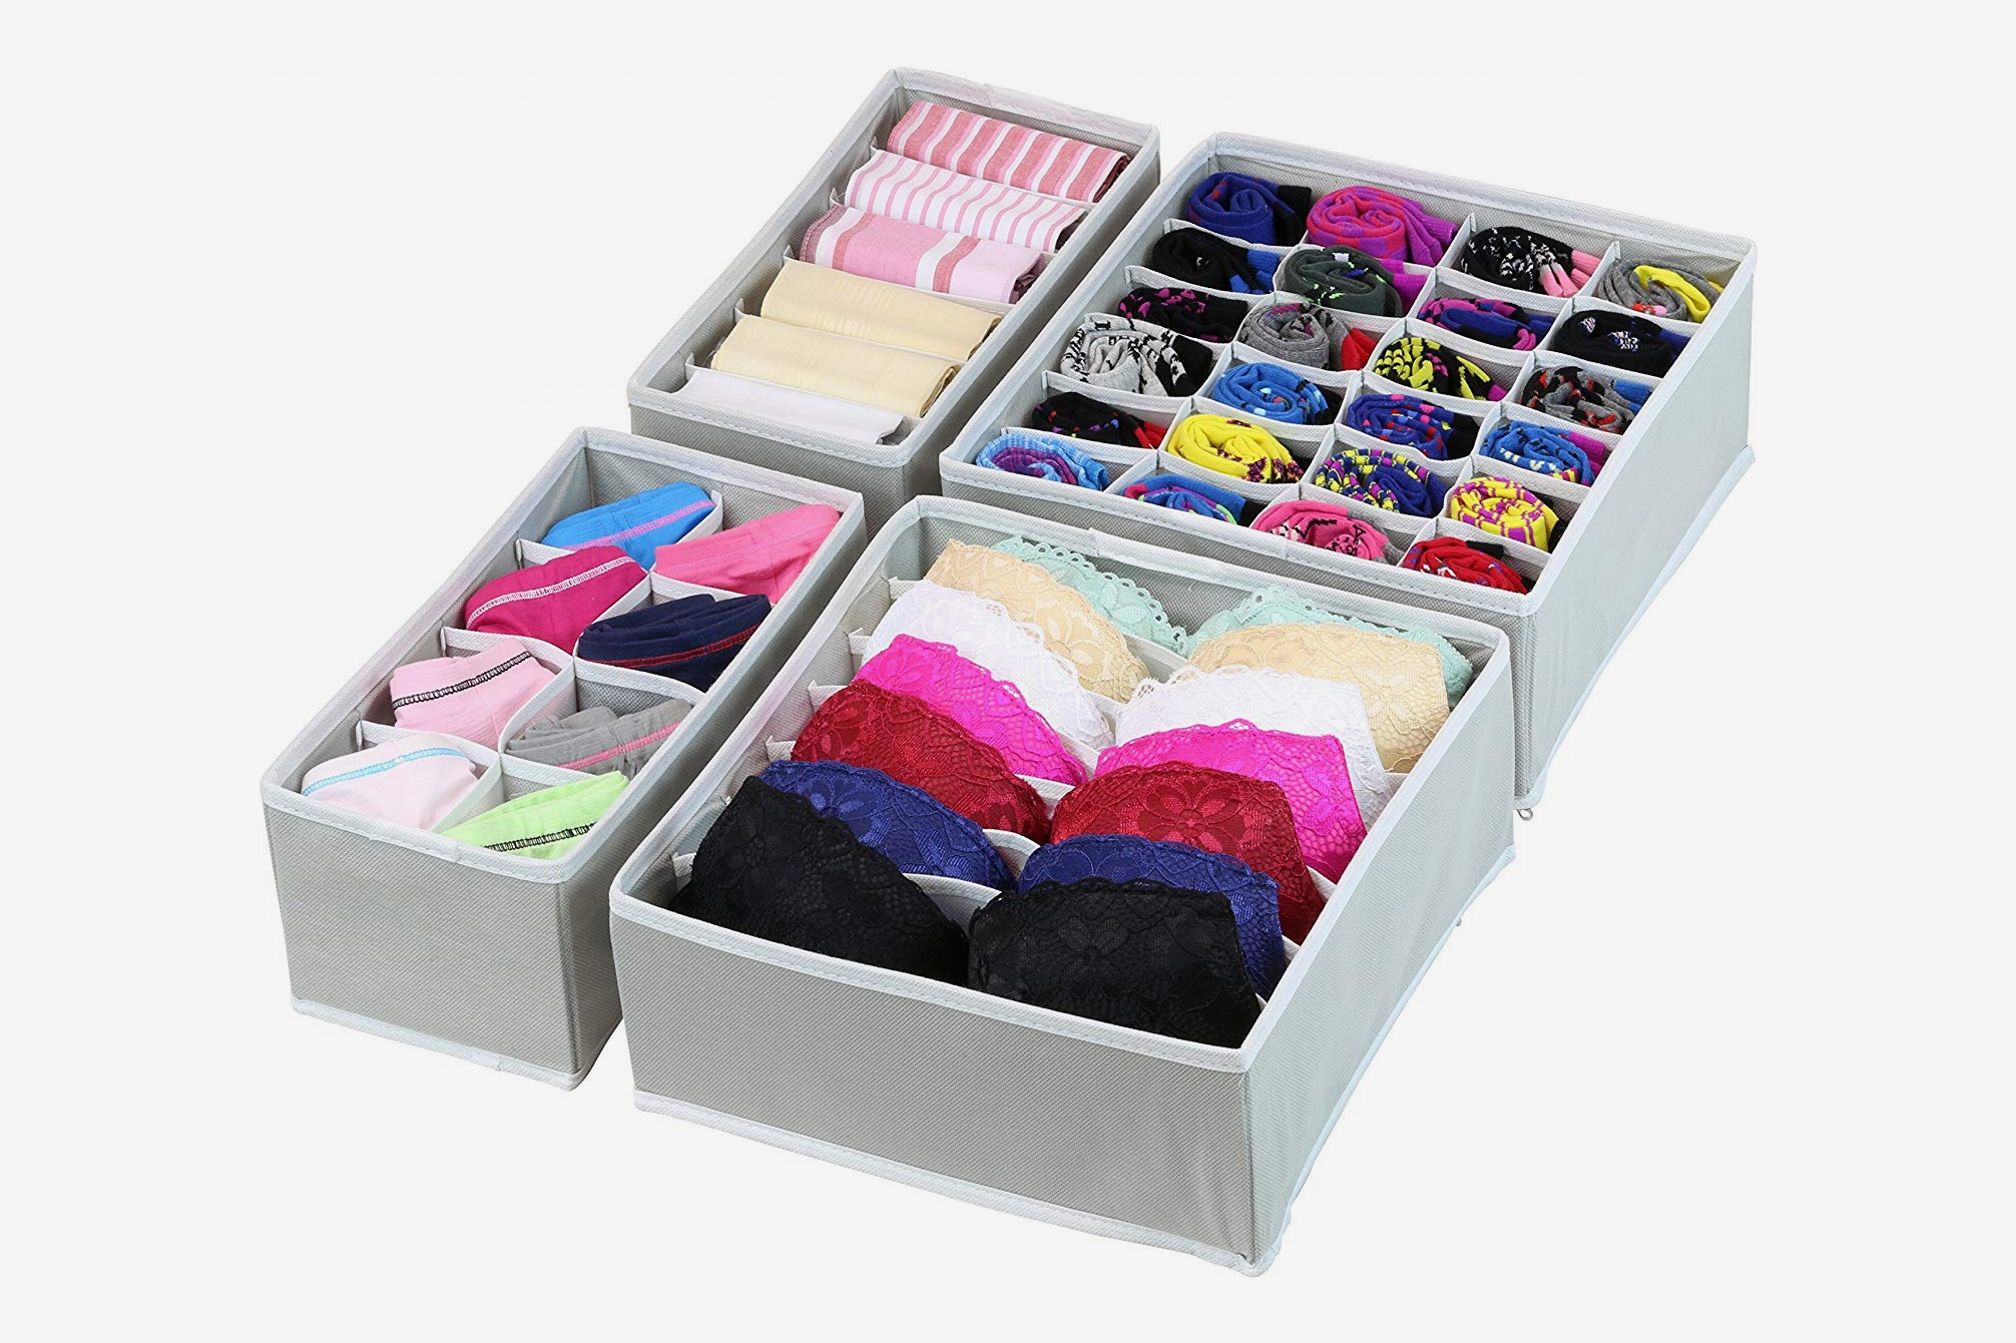 Closet Underwear Organiser Upgrade Sturdy Collapsible Drawer Divider for Socks Panties Bra Ties Clothing Magicfly Bra Organiser Set of 4 Black 